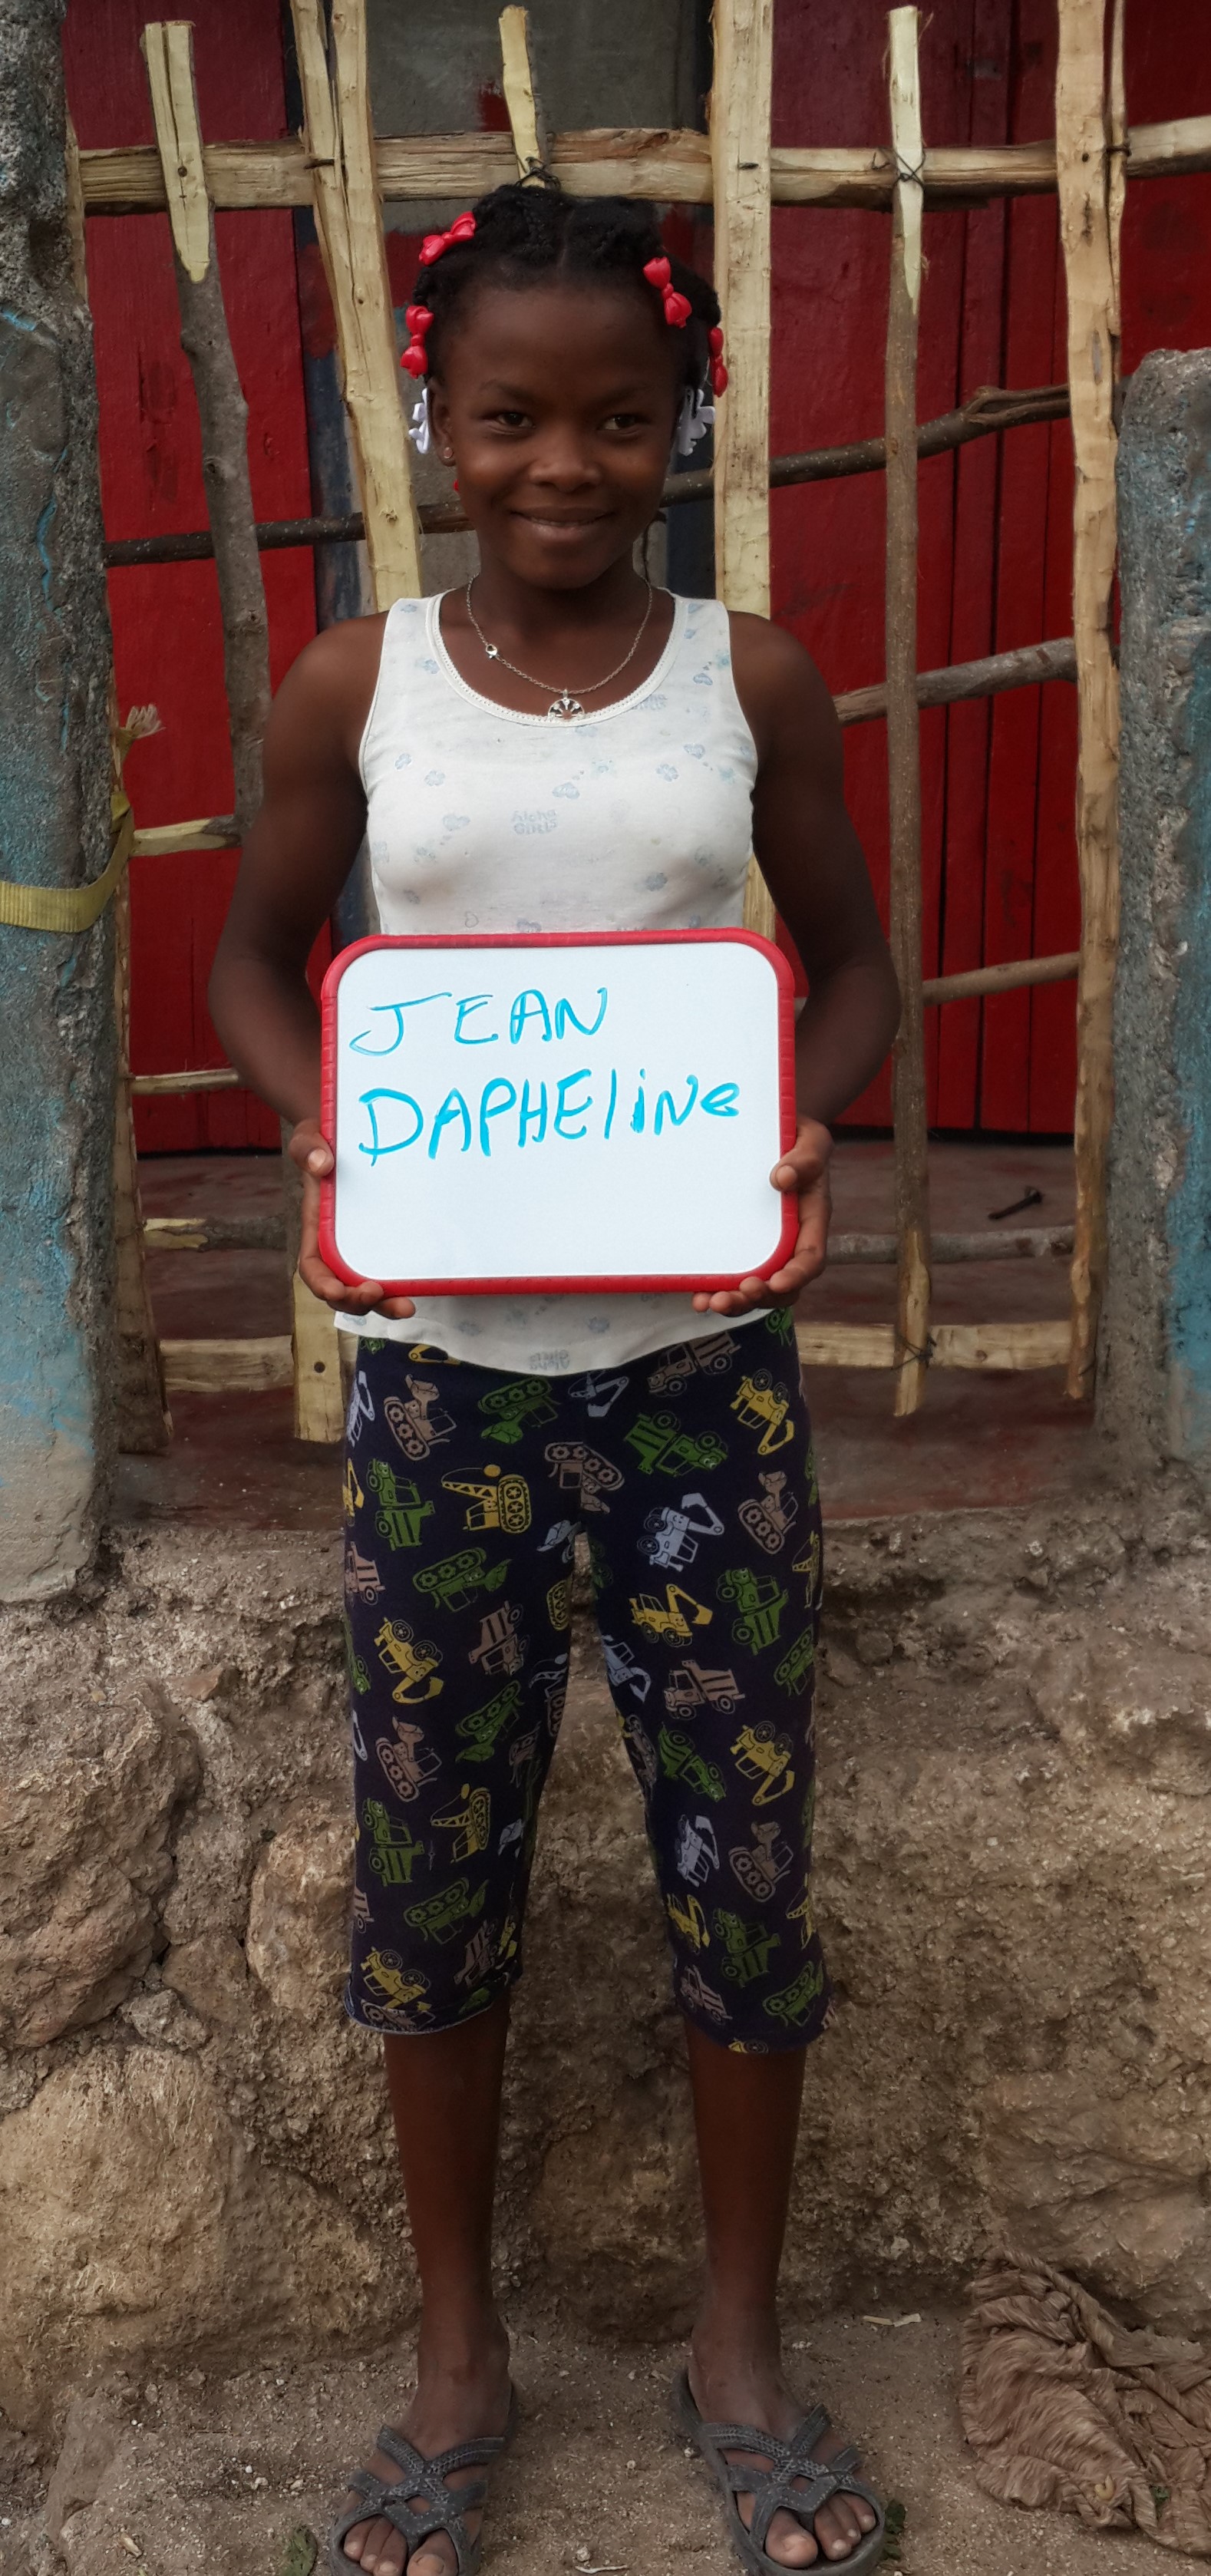 Dapheline Jean